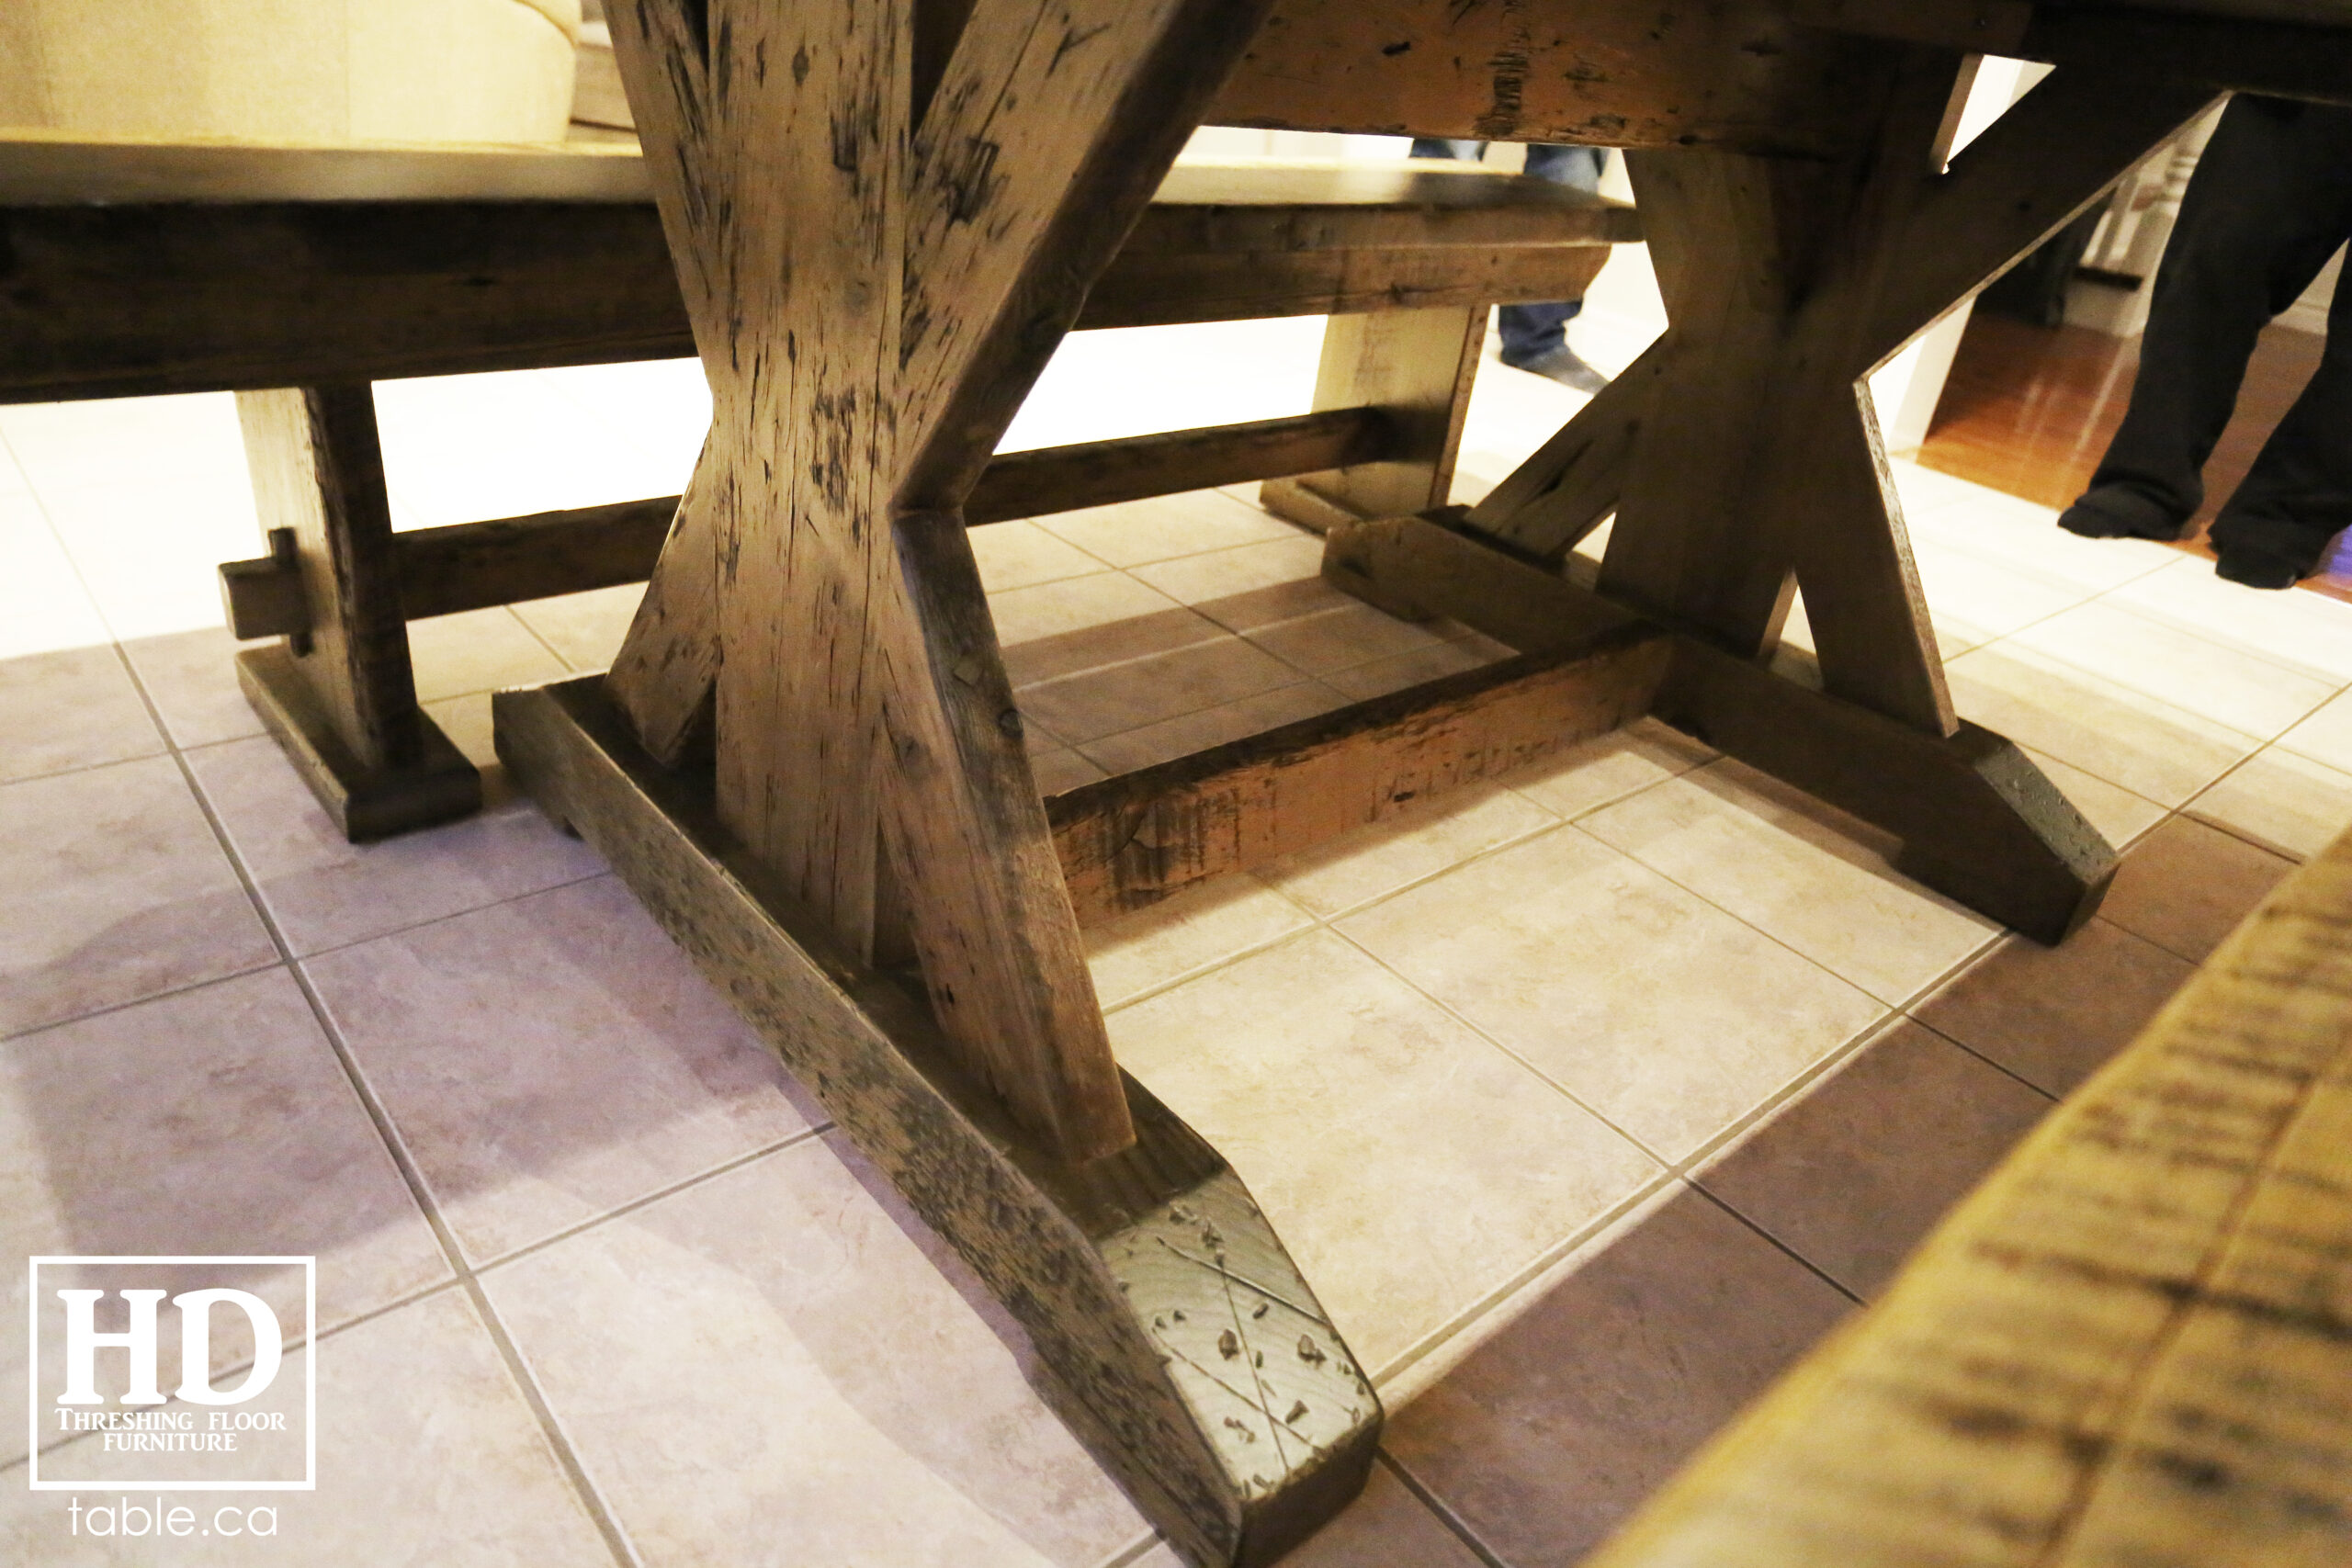 Ontario Barnboard Table by HD Threshing Floor Furniture / www.table.ca